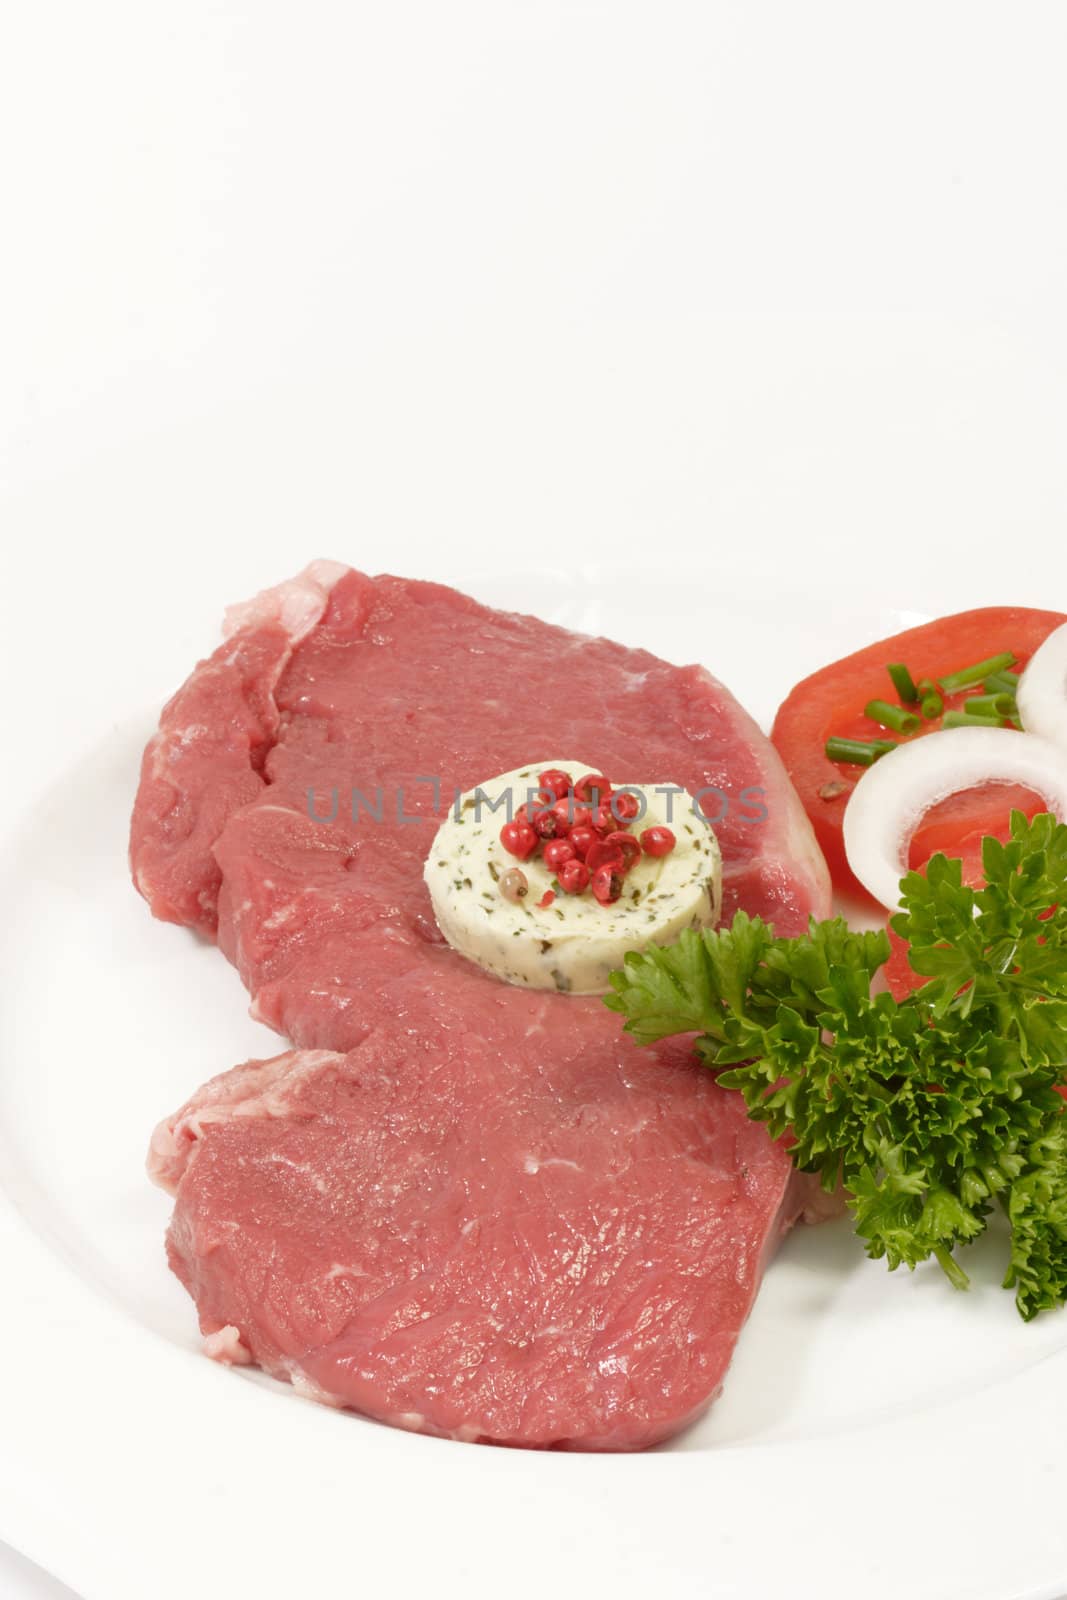 Raw roast beef with garnish on bright background